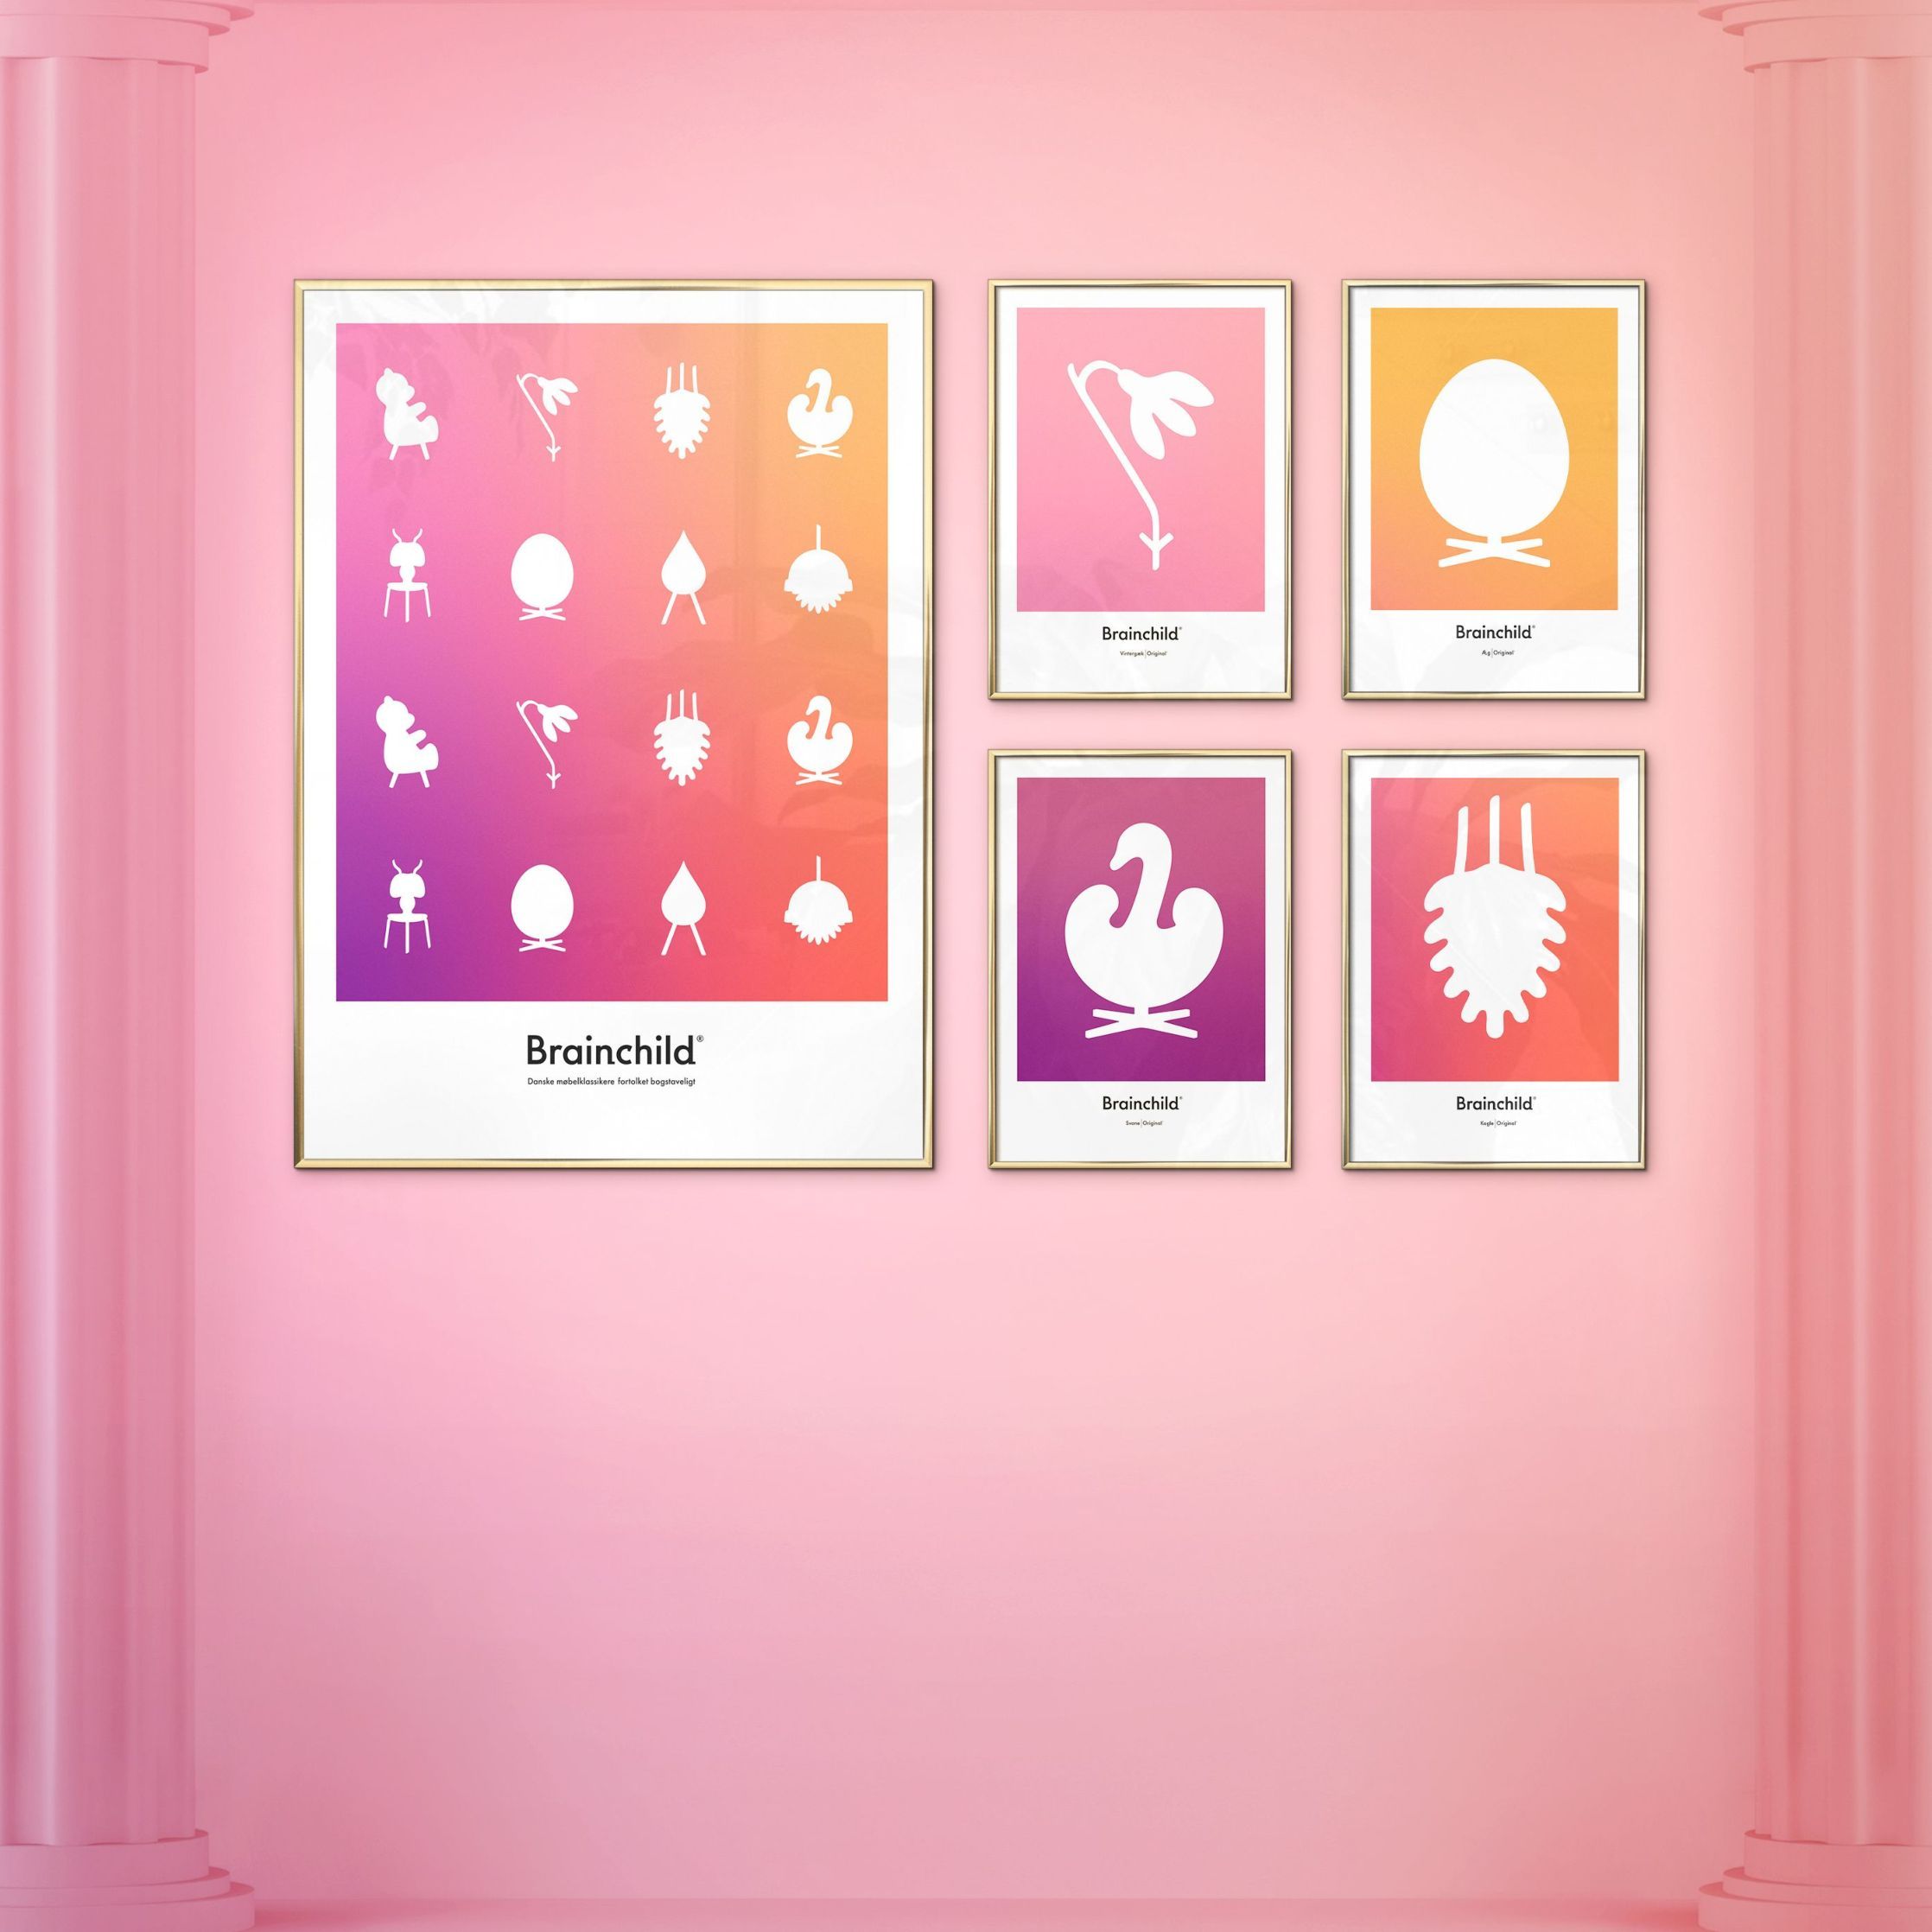 Brainchild Snowdrop Design Icon Poster, Frame Made Of Light Wood 70x100 Cm, Pink